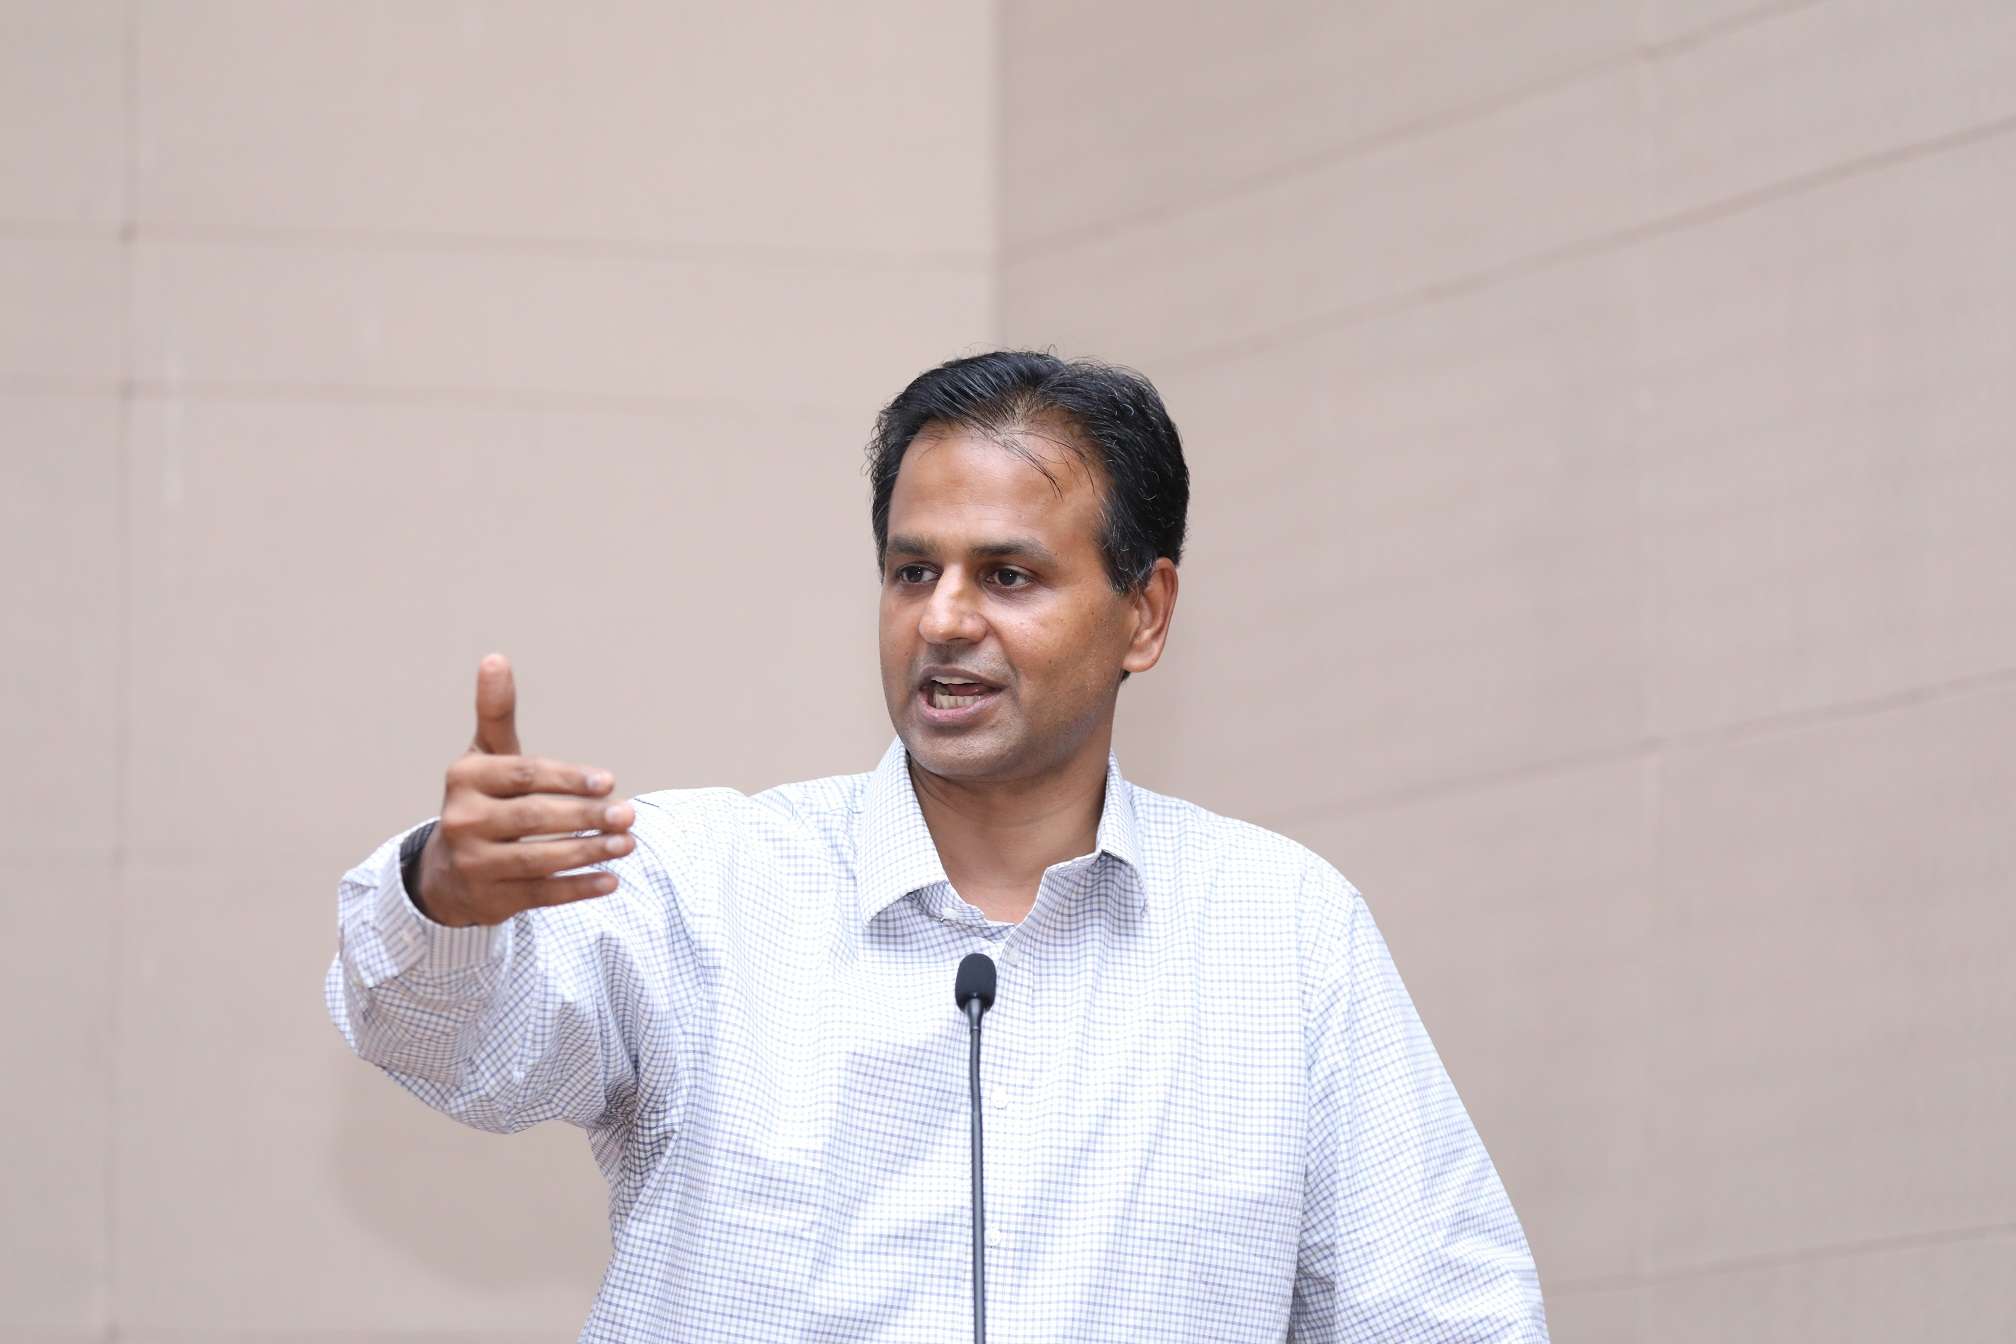 At IITGn, Dr Aravind Srinivasan talks about building an eye centre